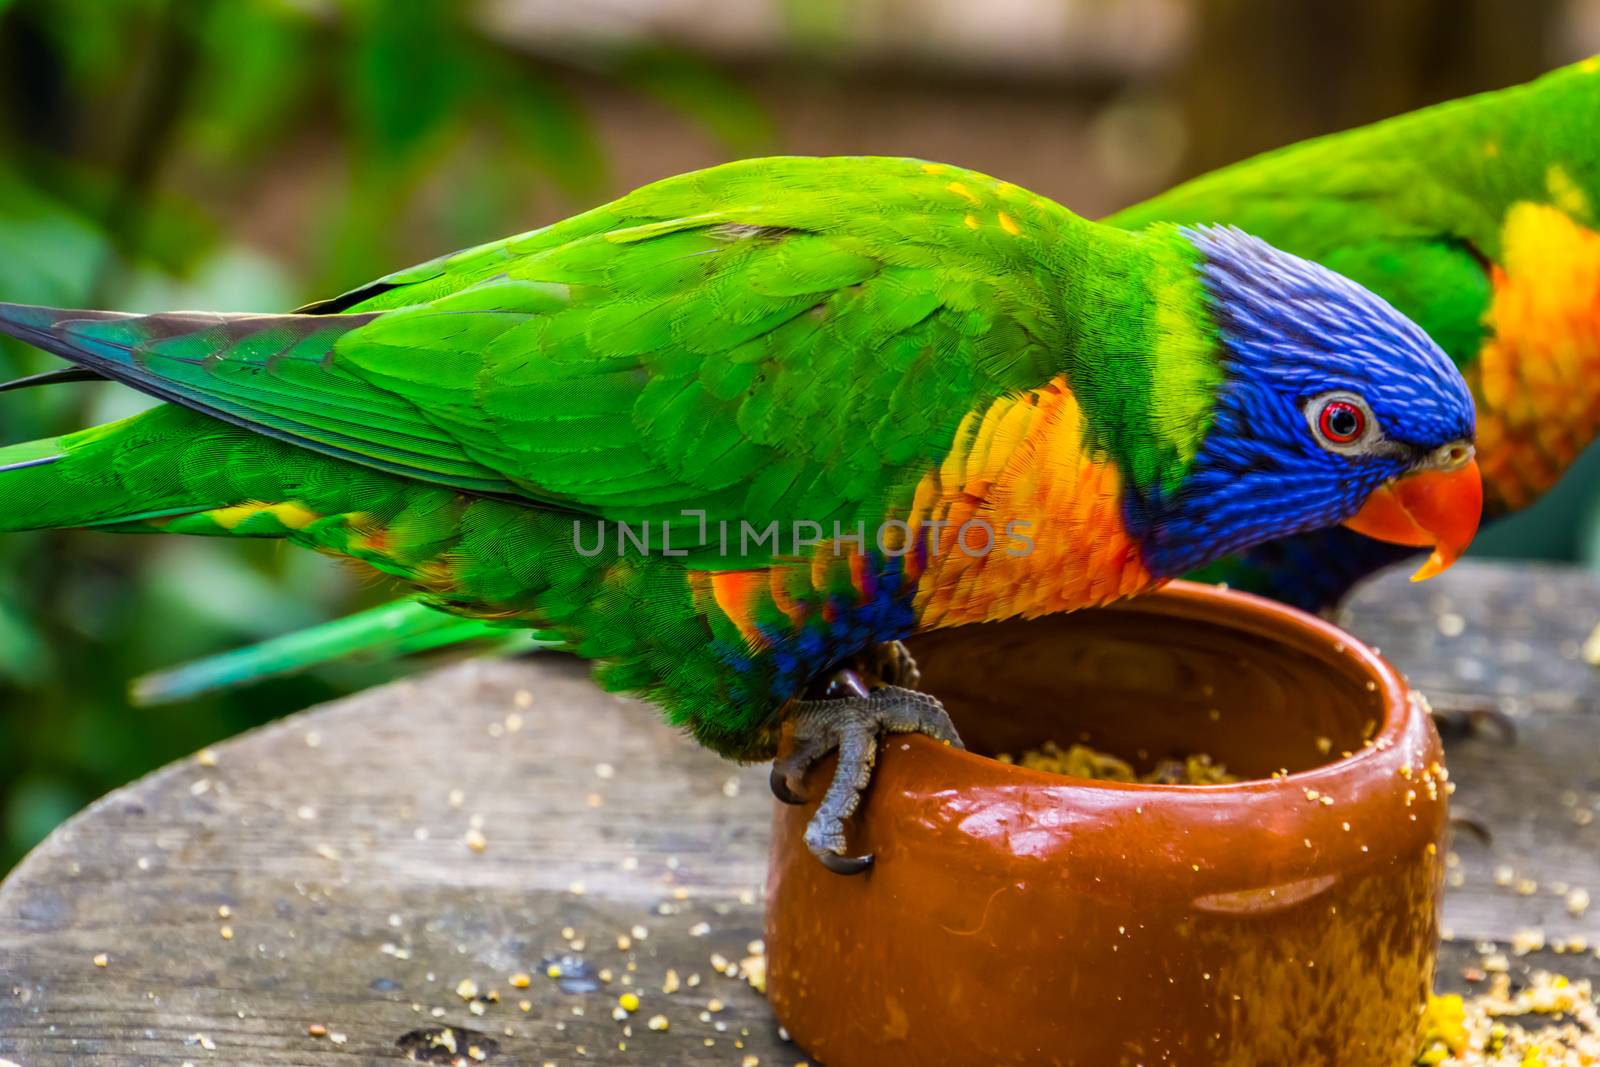 closeup of a rainbow lorikeet eating from a feeding bowl, bird diet, Tropical animal specie from Australia by charlottebleijenberg